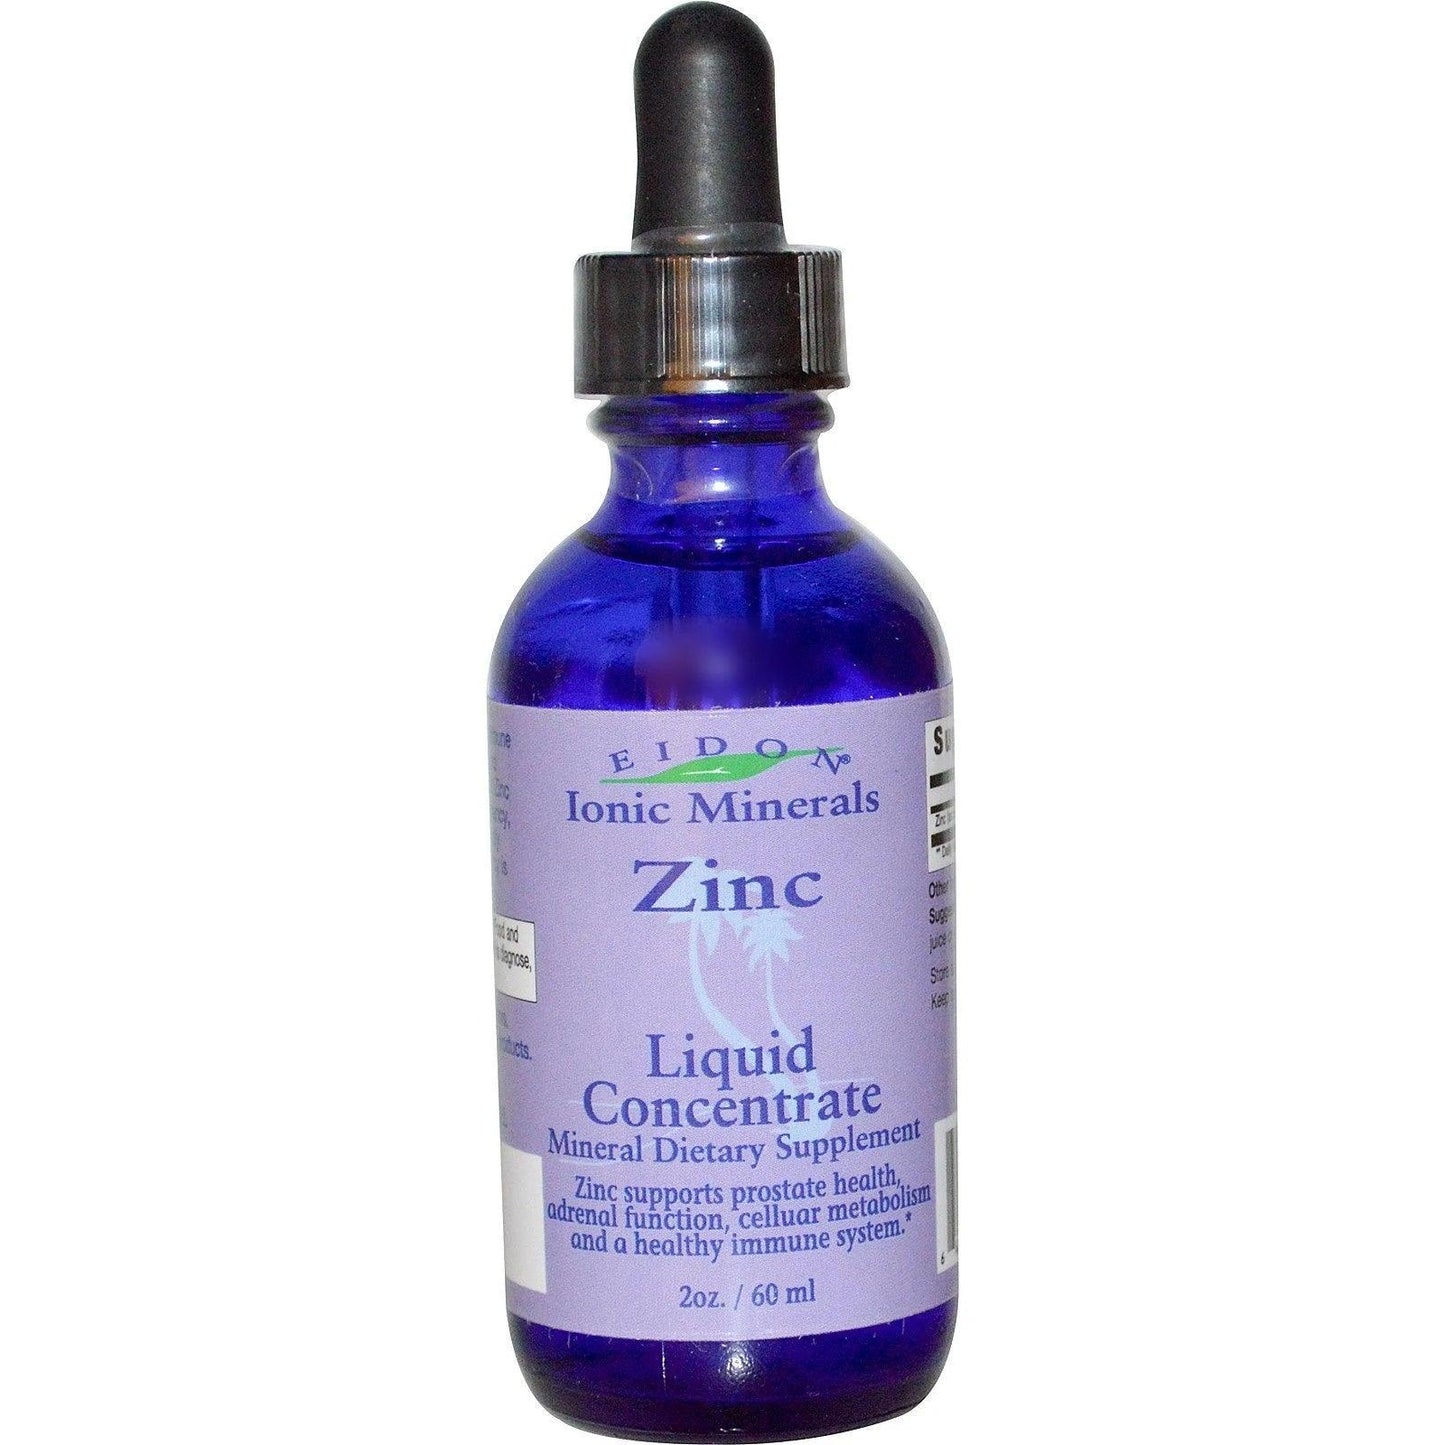 Zinc, Liquid Concentrate, 60ml - Eidon Mineral Supplements - welzo